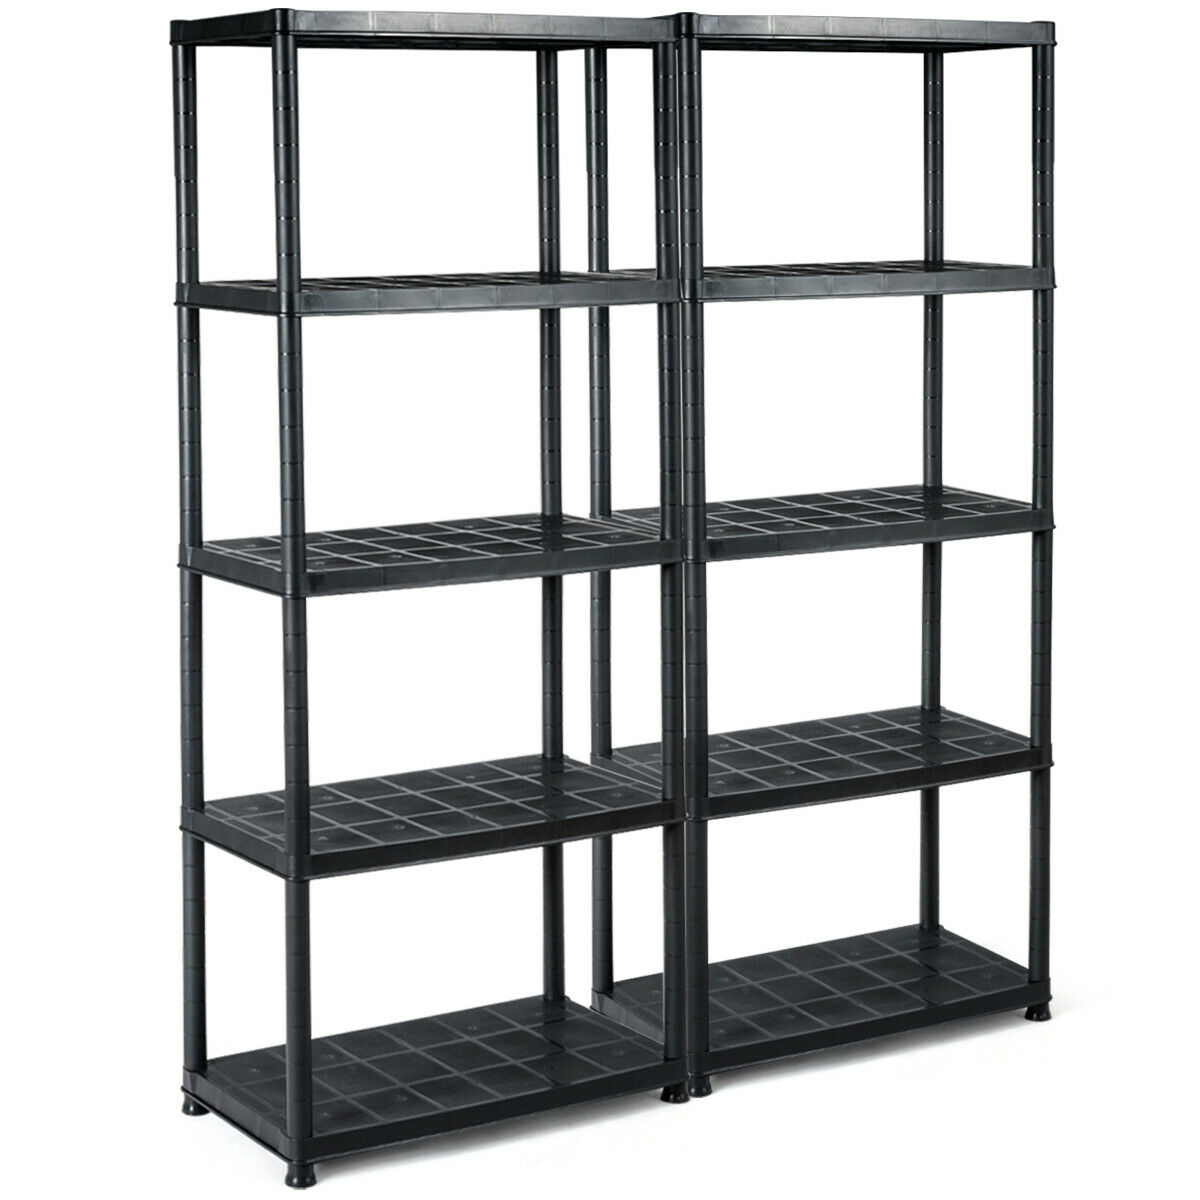 2 PCS 5 Tier Ventilated Shelving Storage Rack Free Standing Multi-Use Shelf Unit